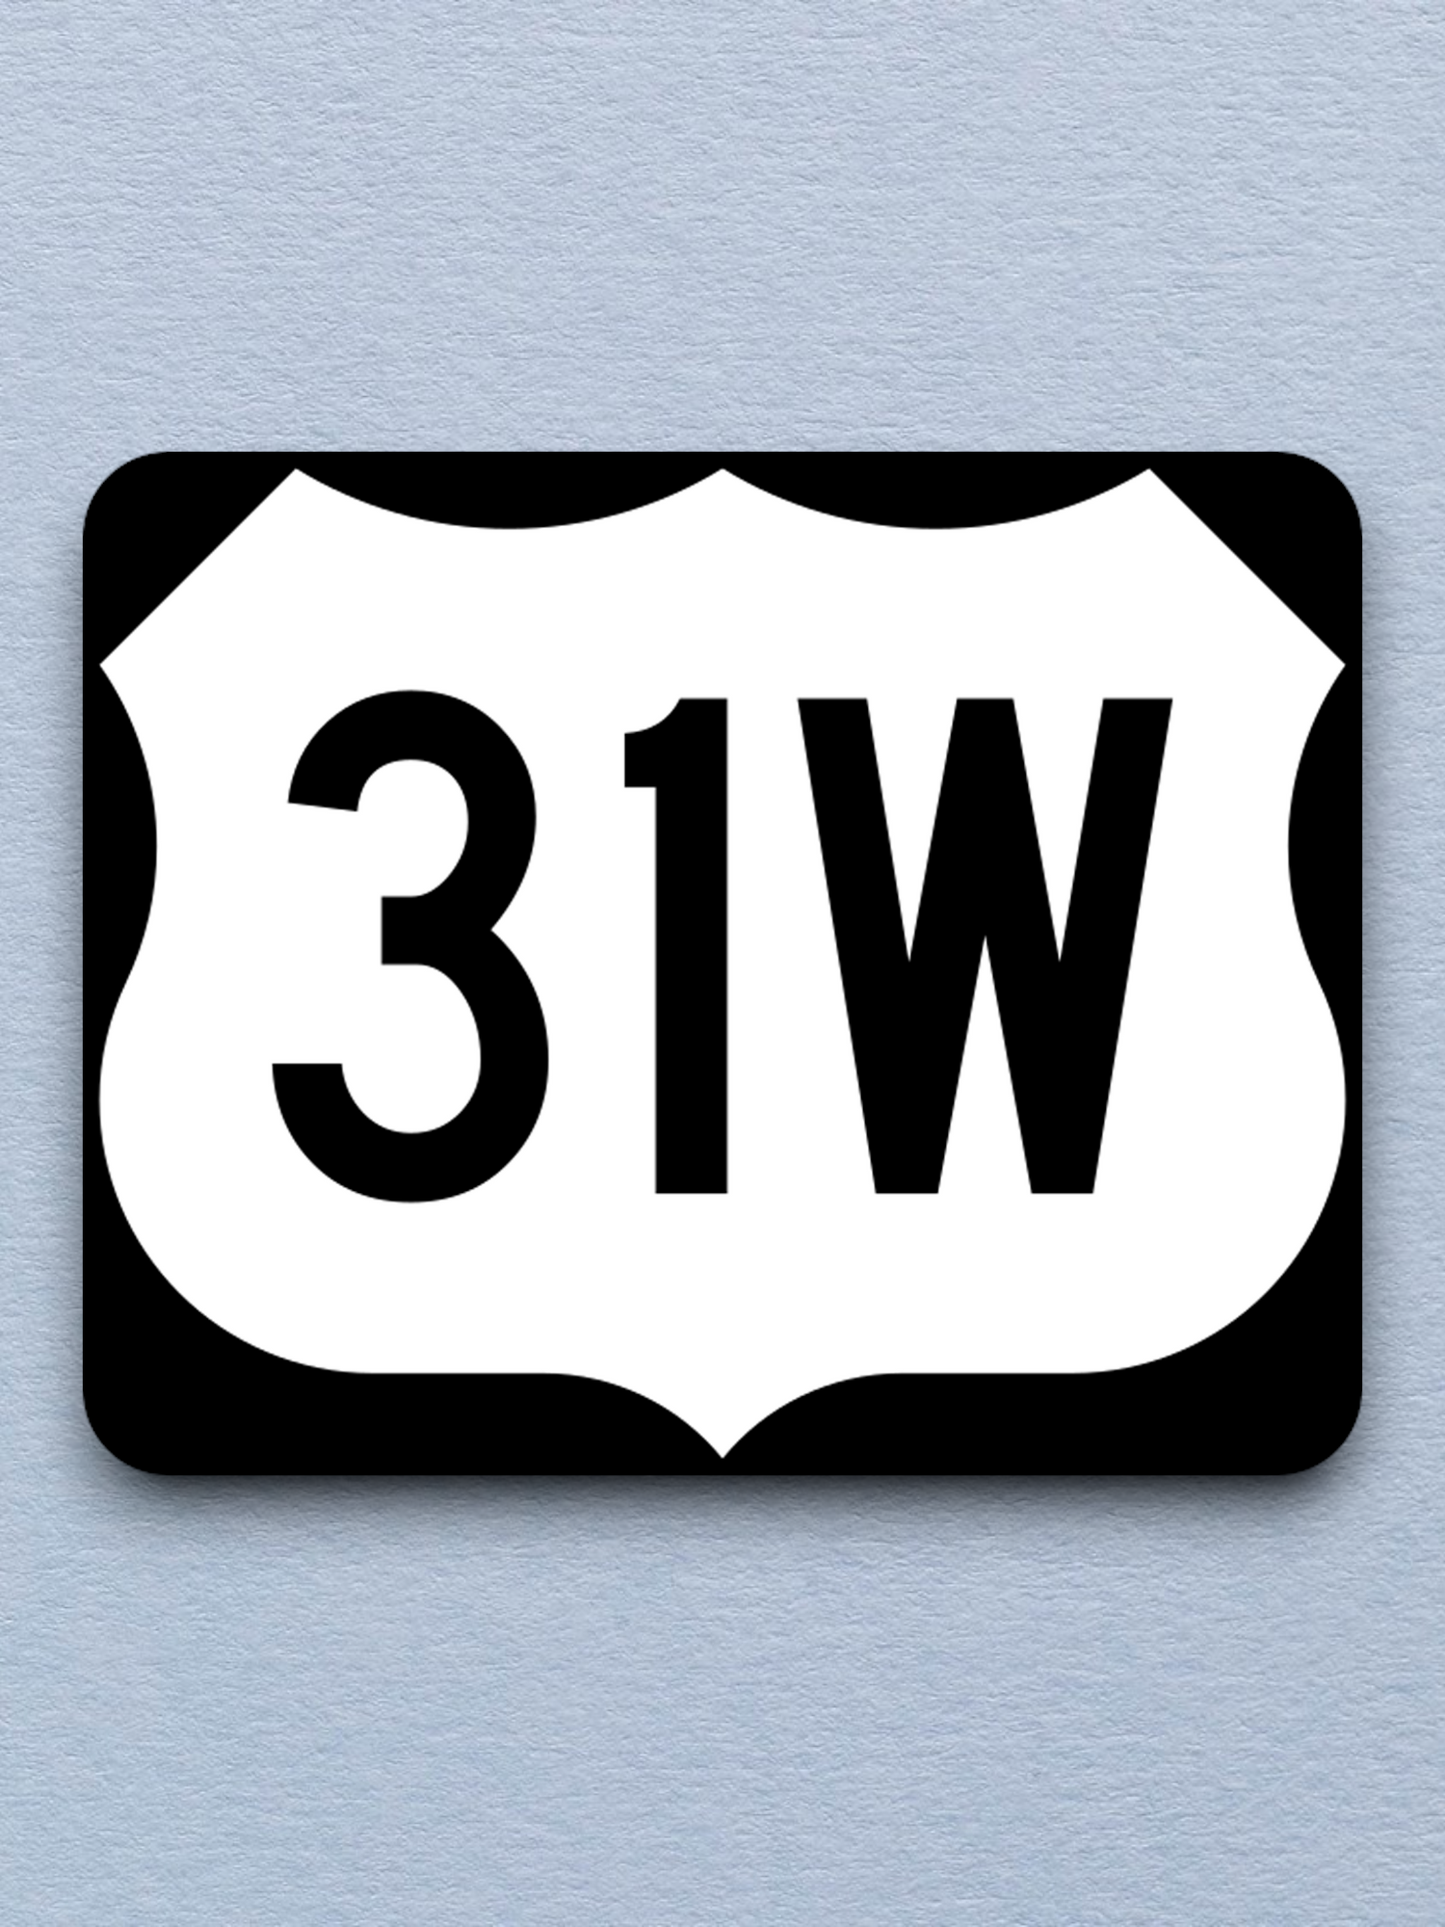 U.S. Route 31W Road Sign Sticker